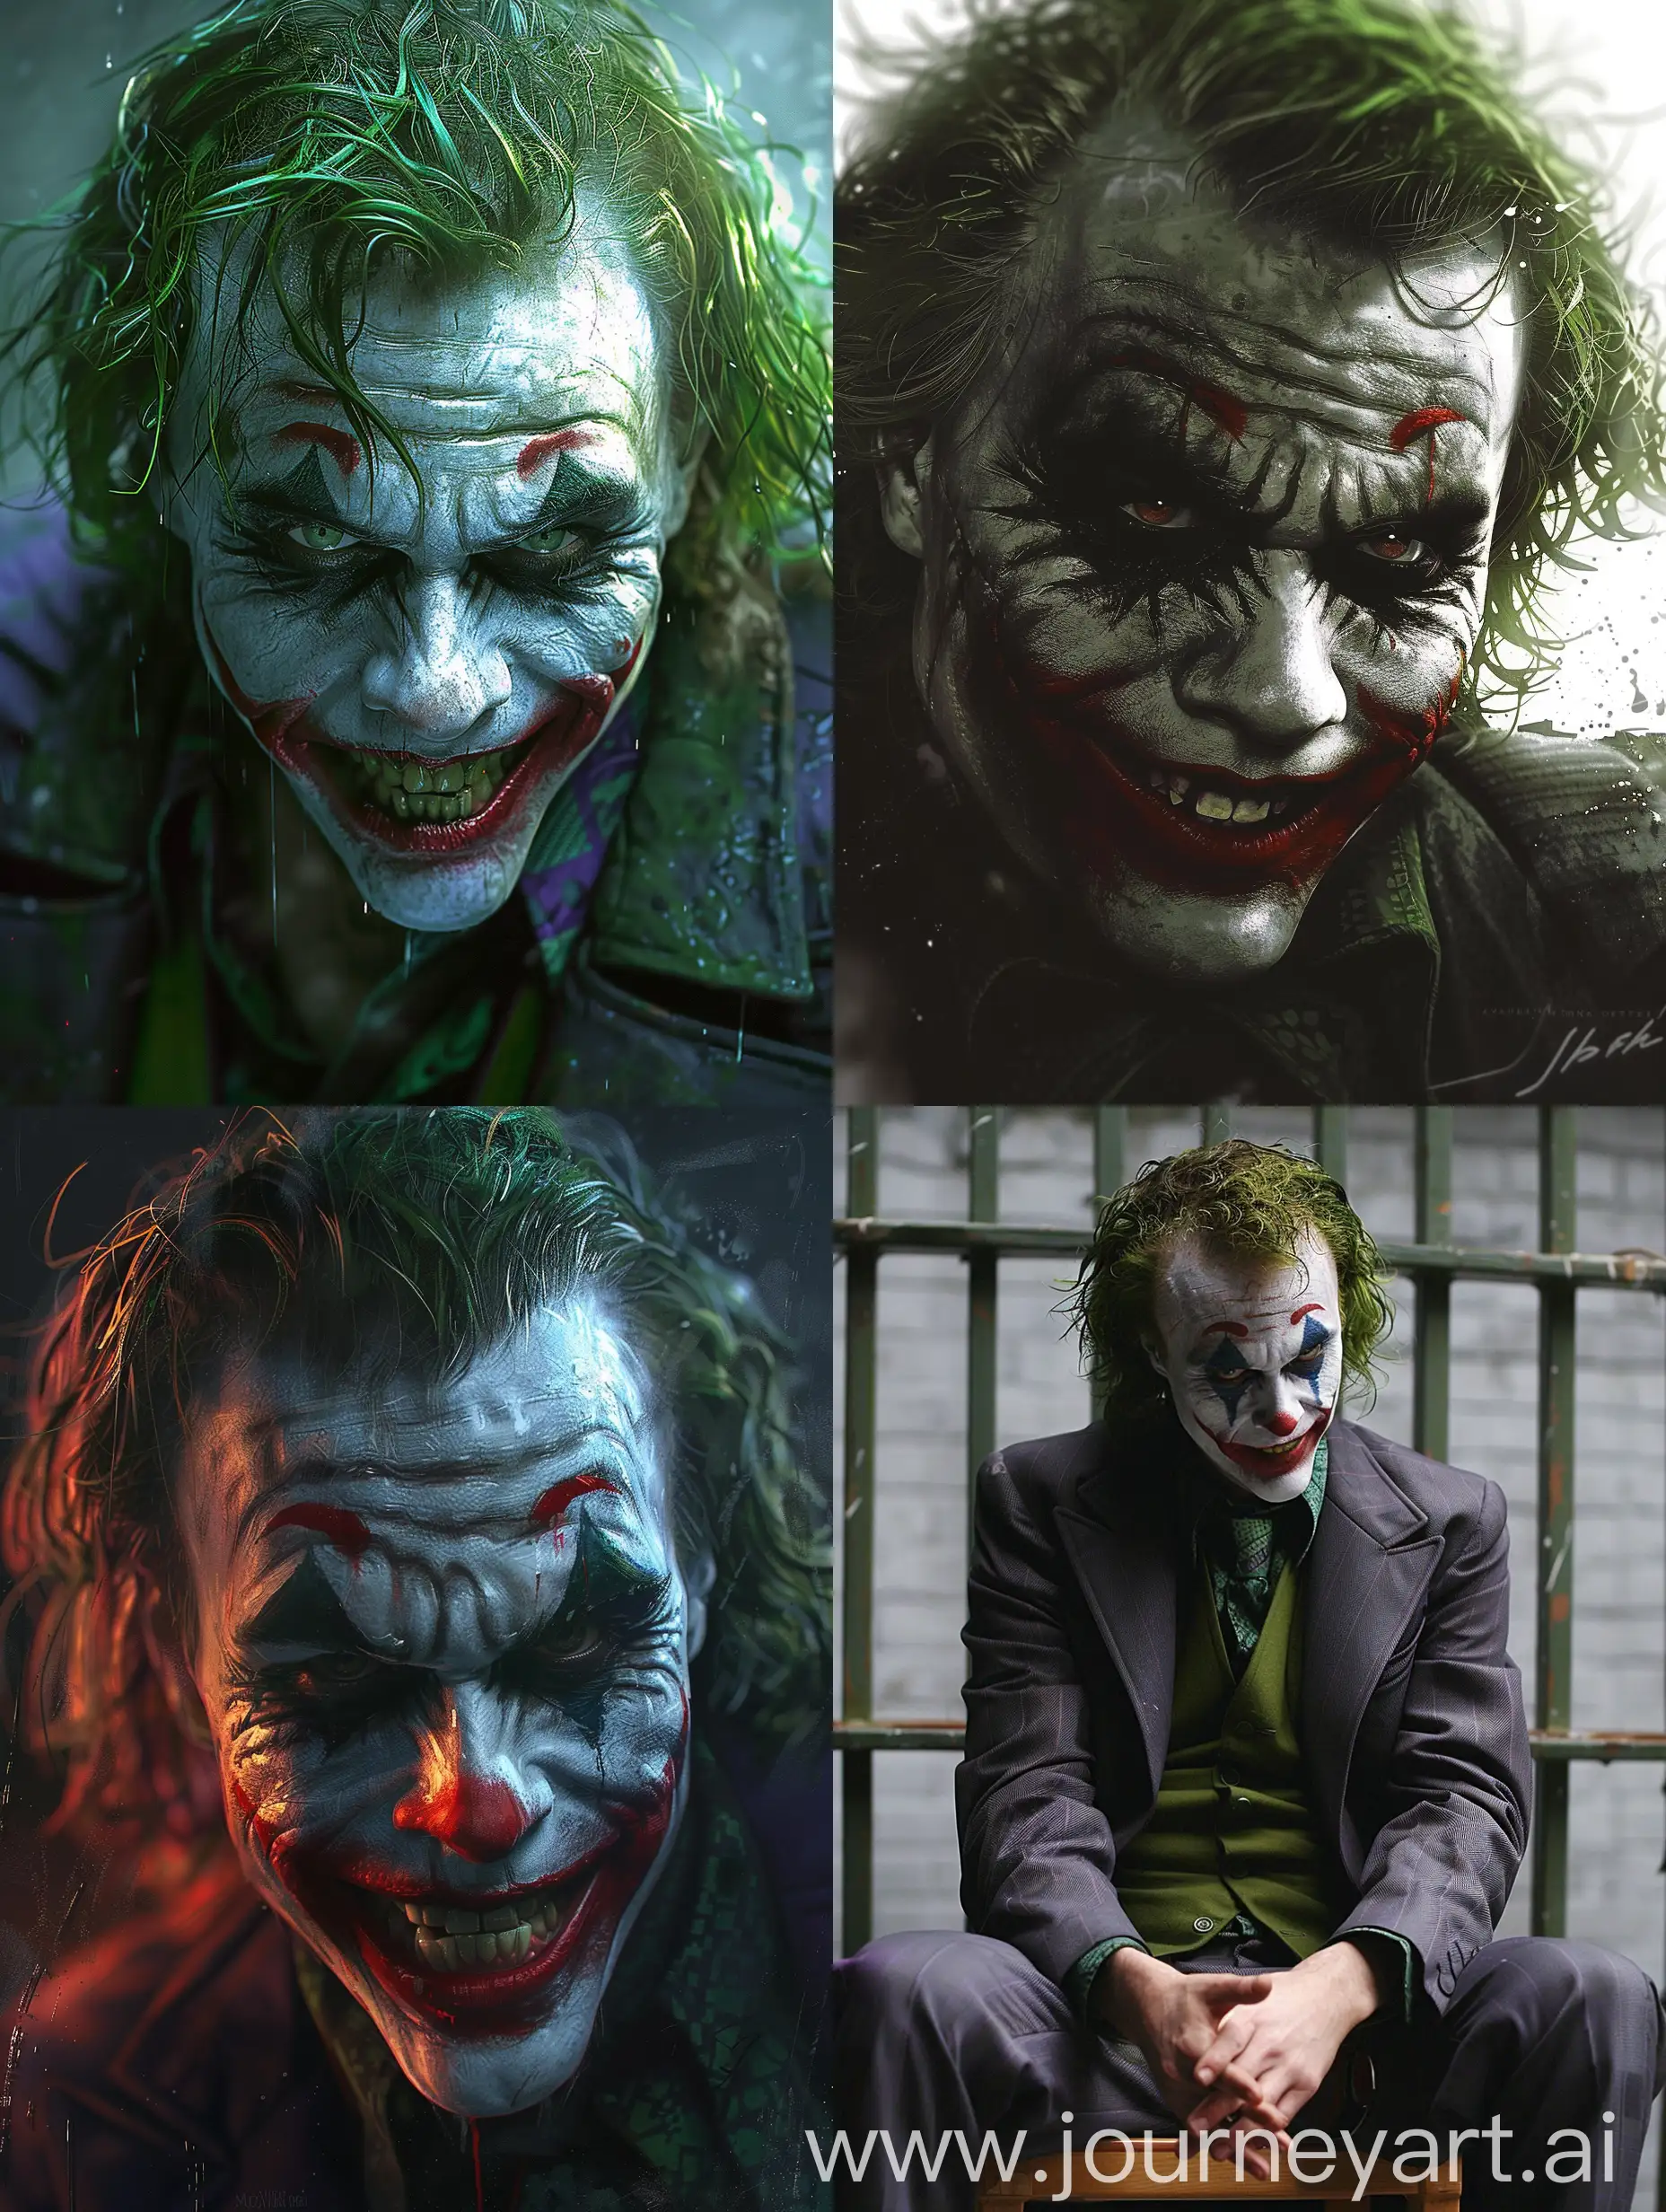 Joker-from-Dark-Knight-Portrait-in-Vertical-Aspect-Ratio-34